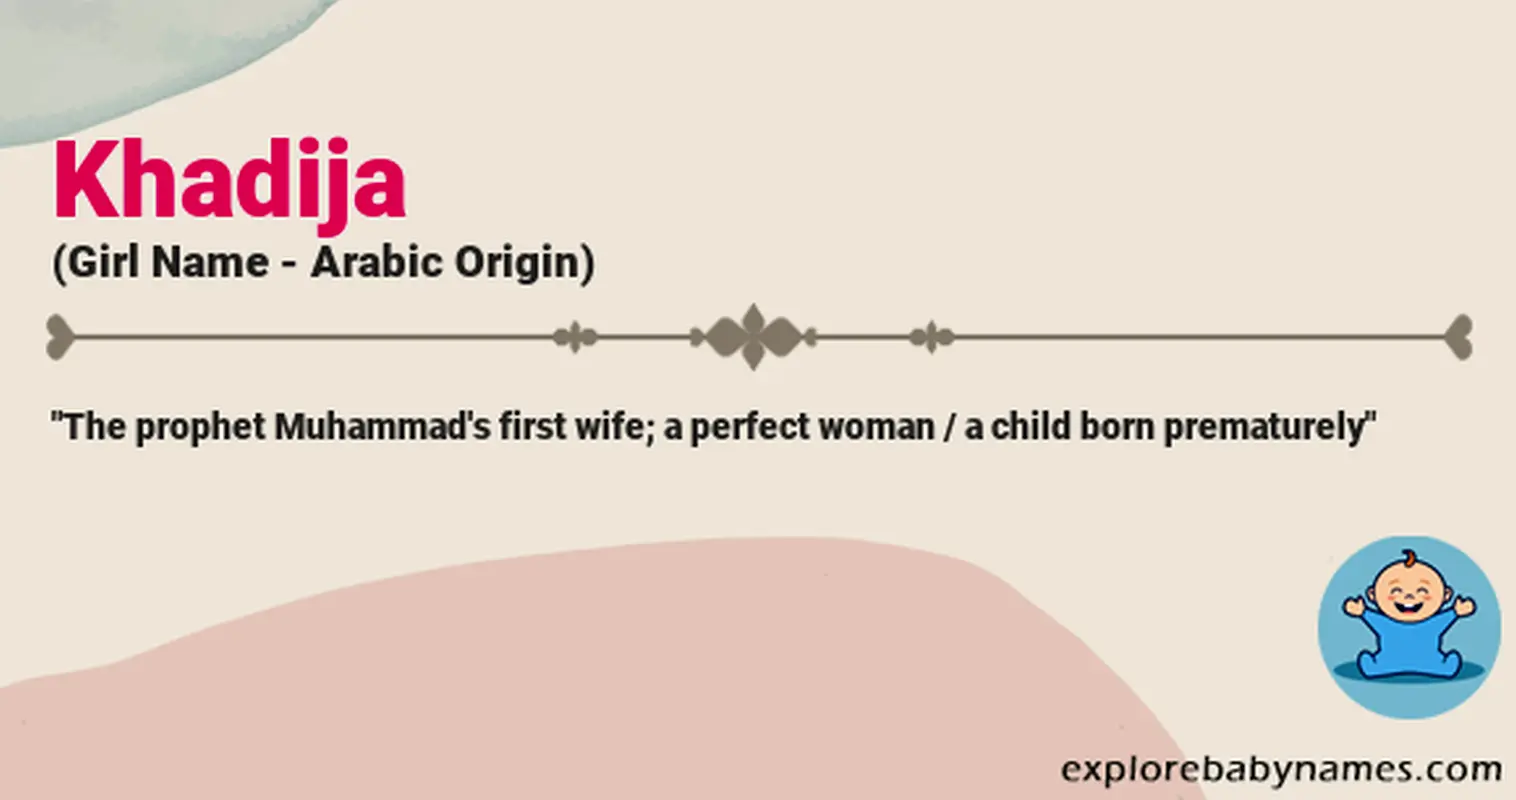 Meaning of Khadija